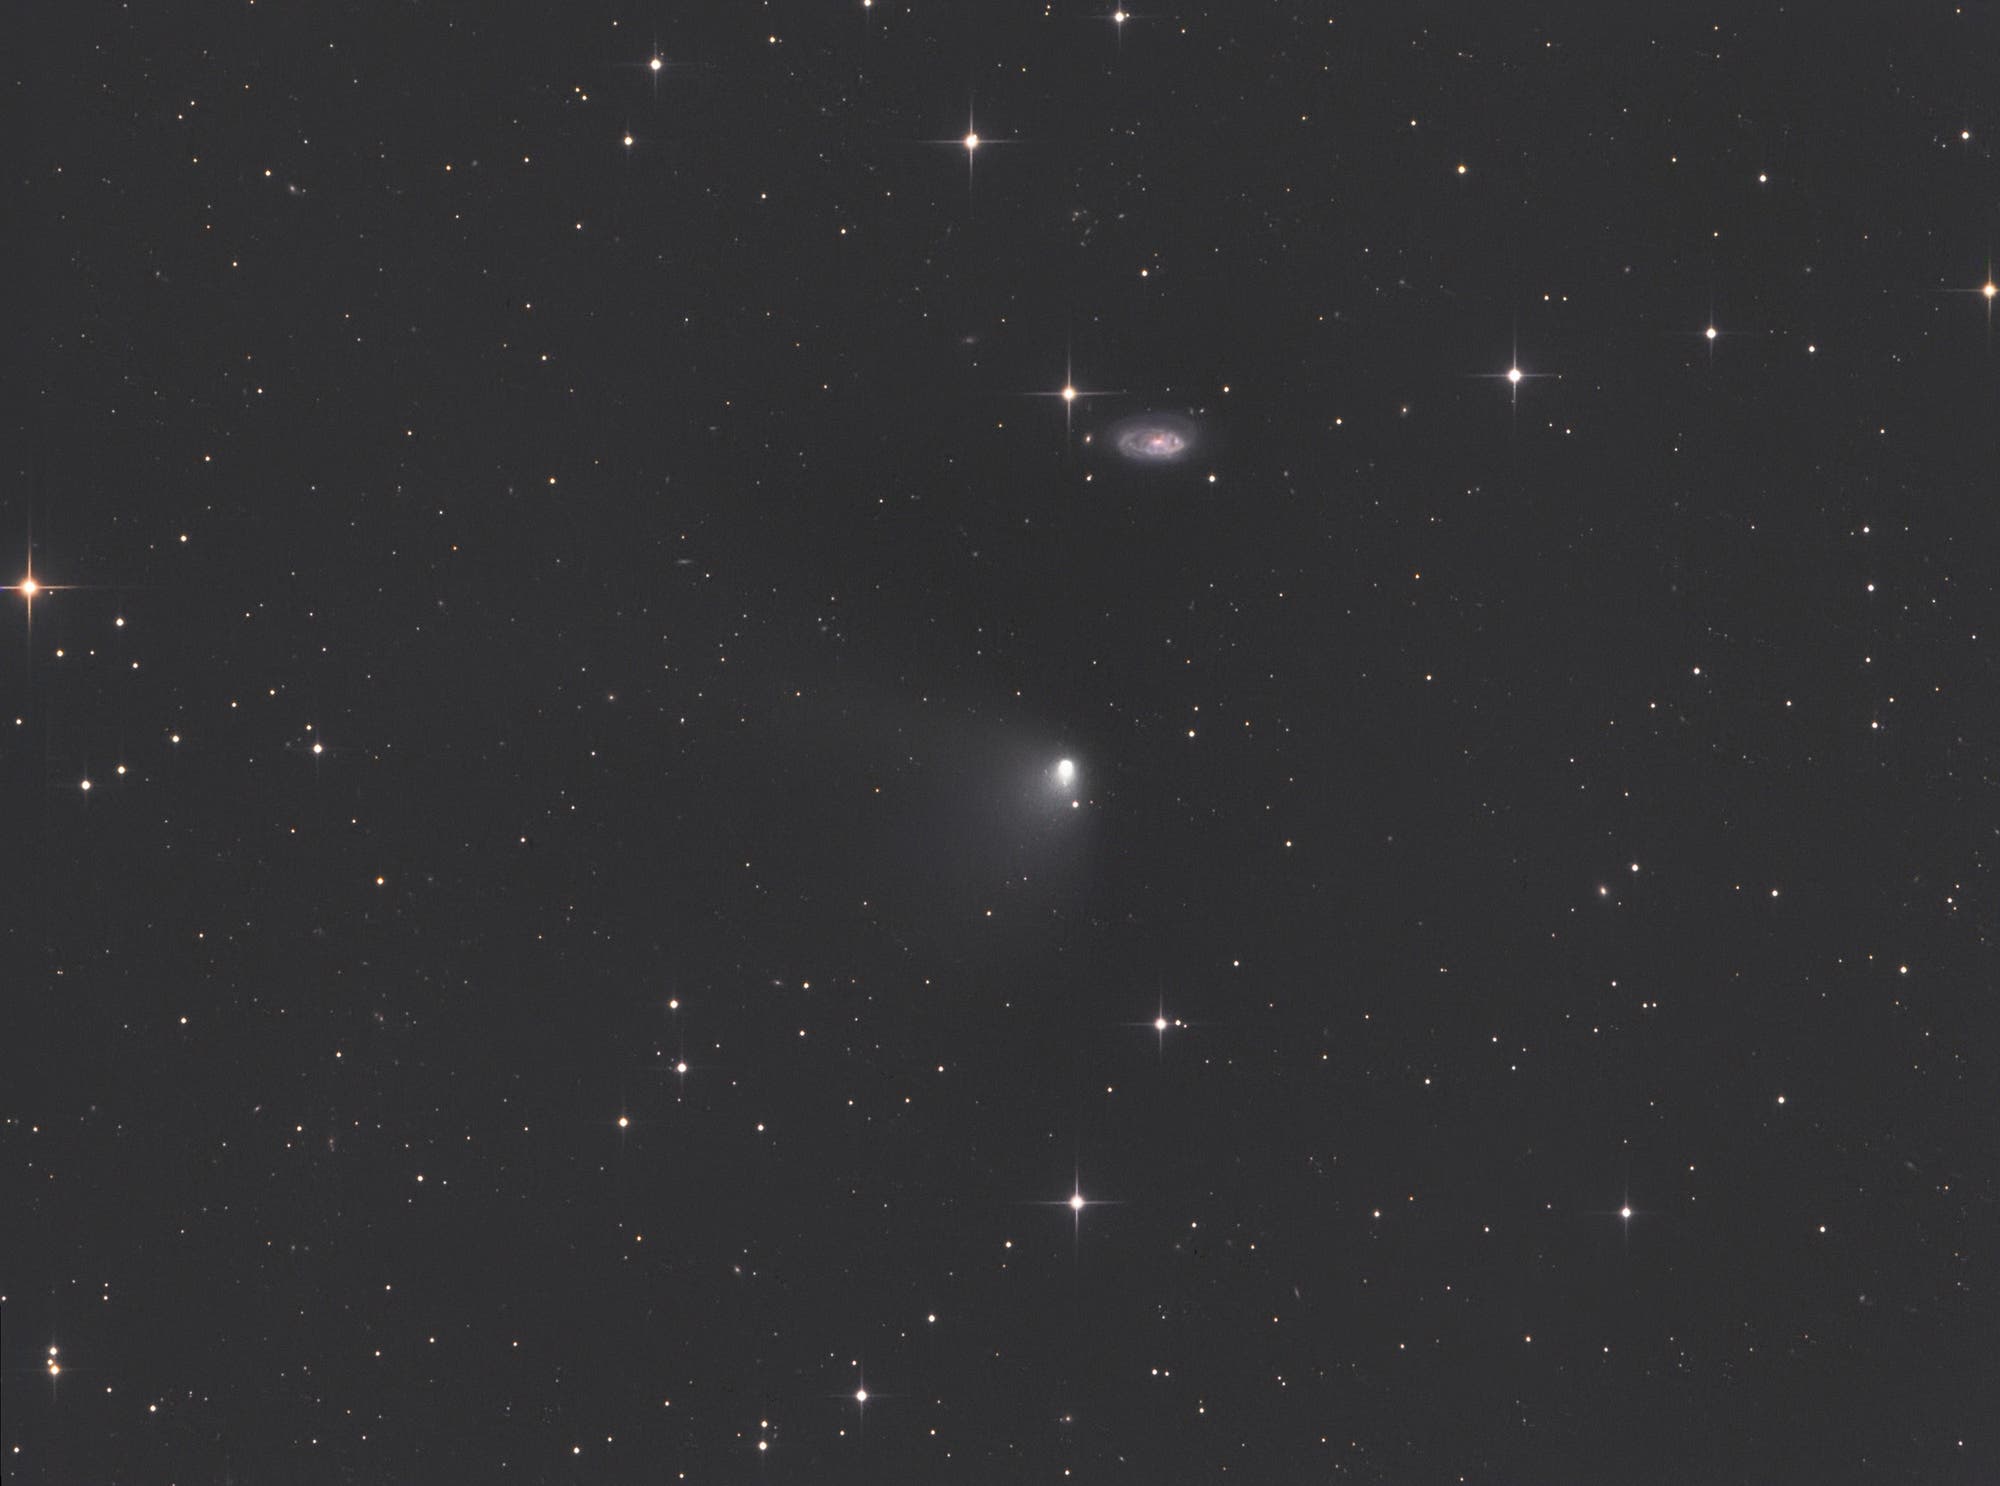 Komet C/2011 L4 (PANSTARRS) bei Galaxie NGC 5678